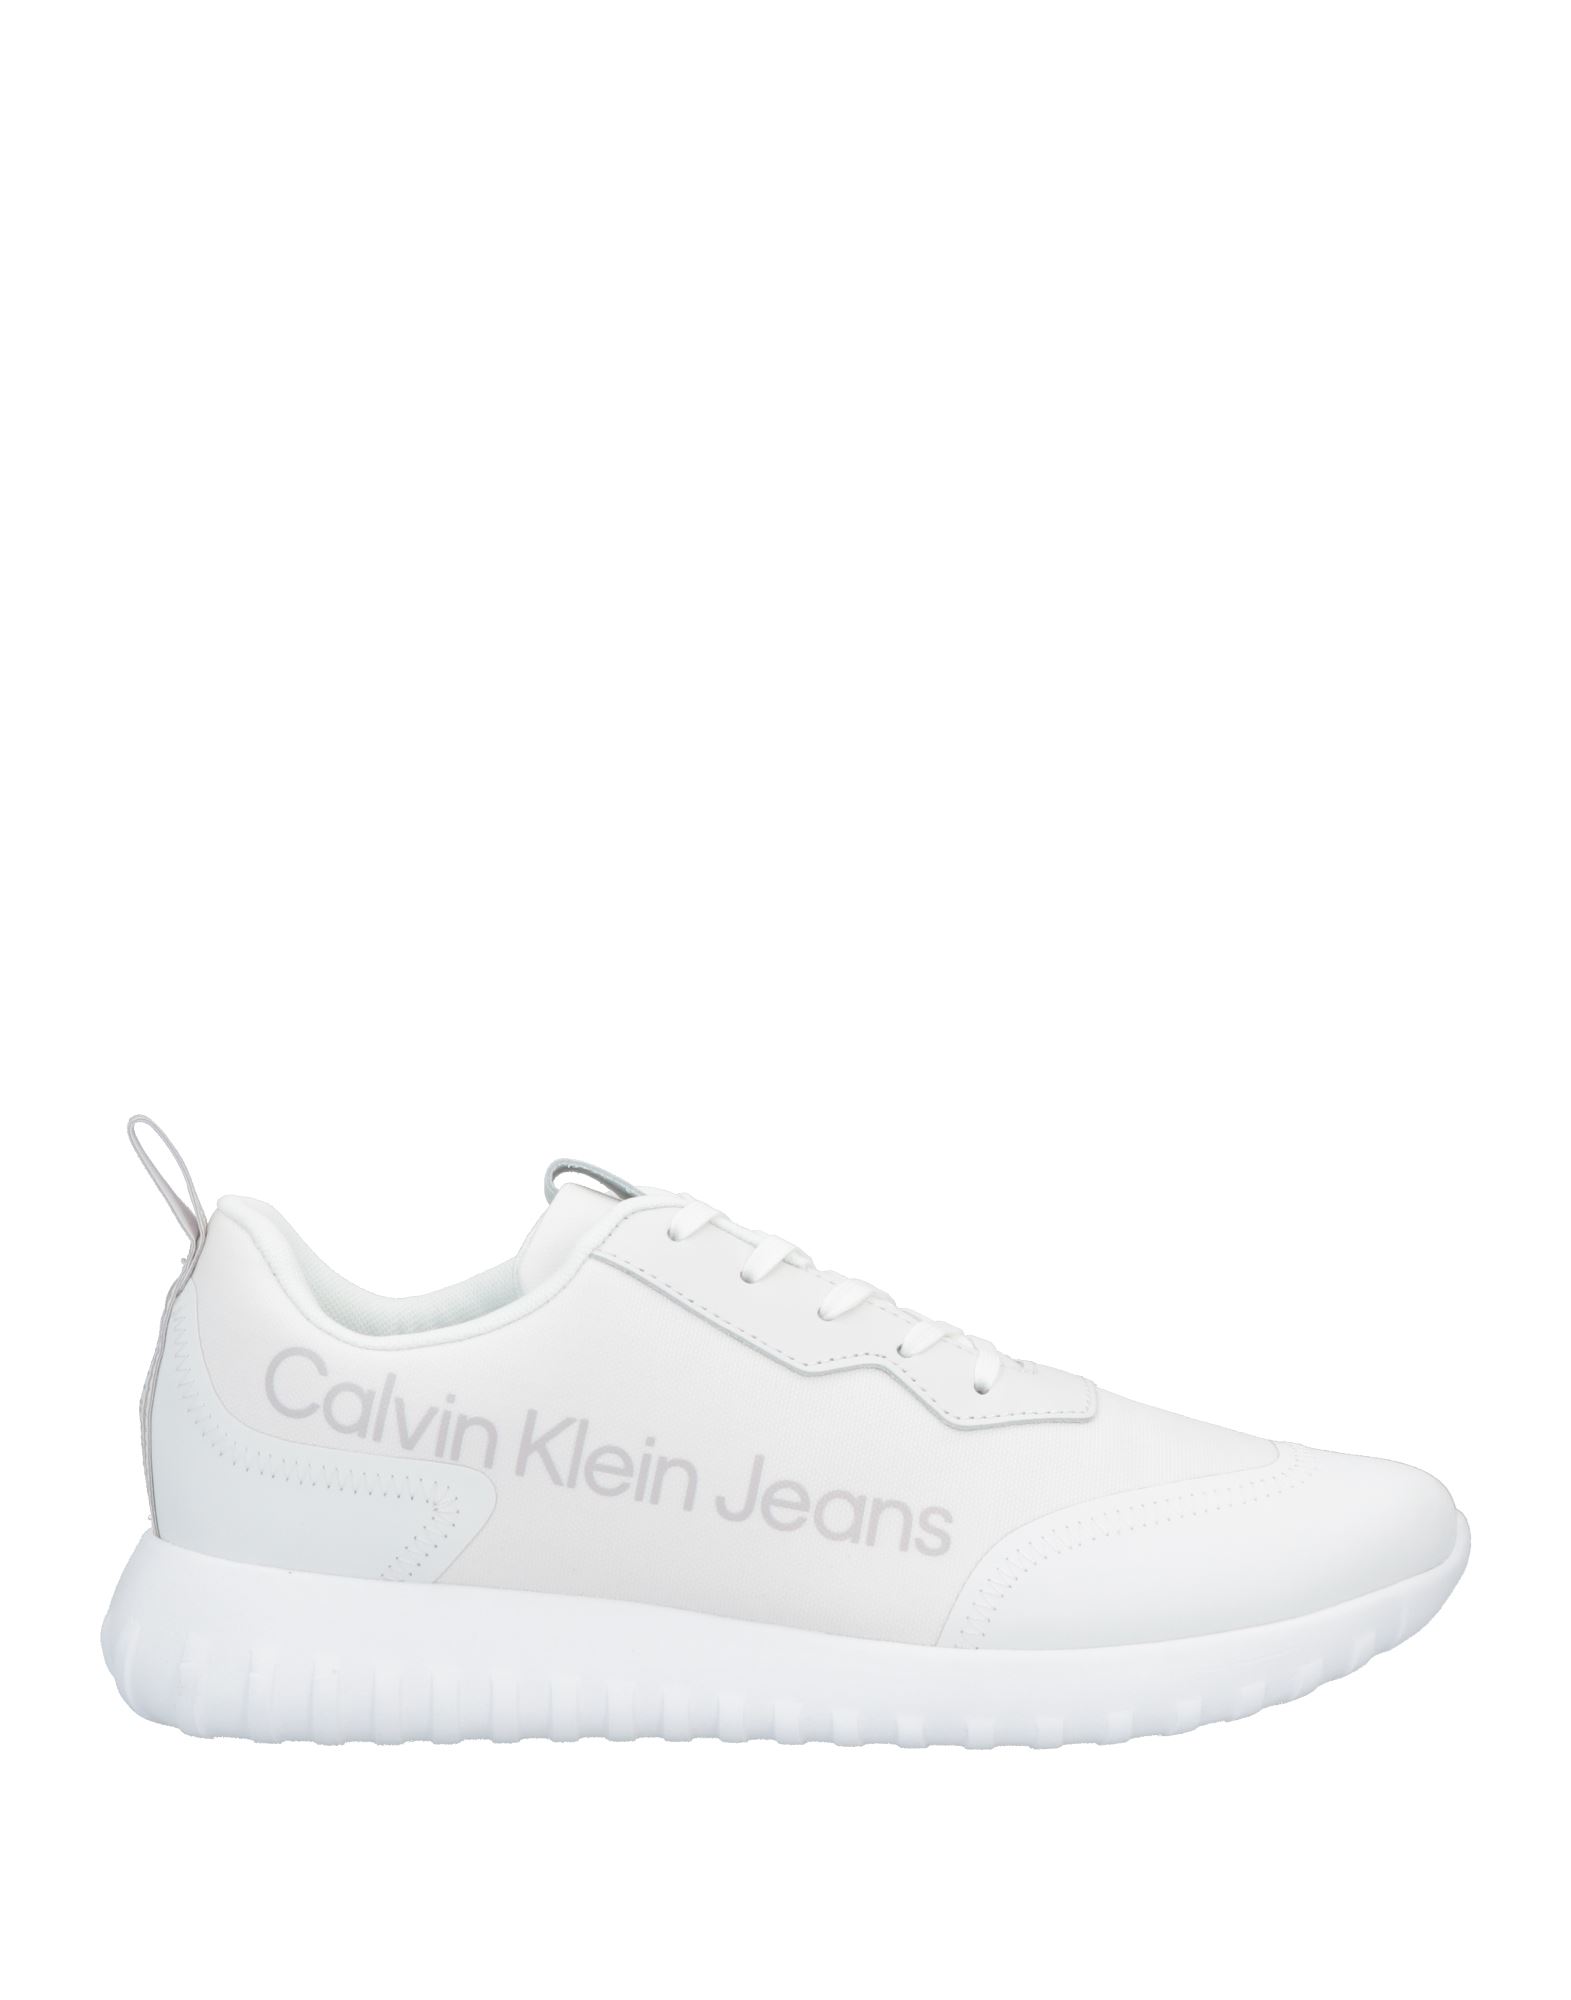 Calvin Klein Jeans Est.1978 Calvin Klein Jeans Sneakers In White